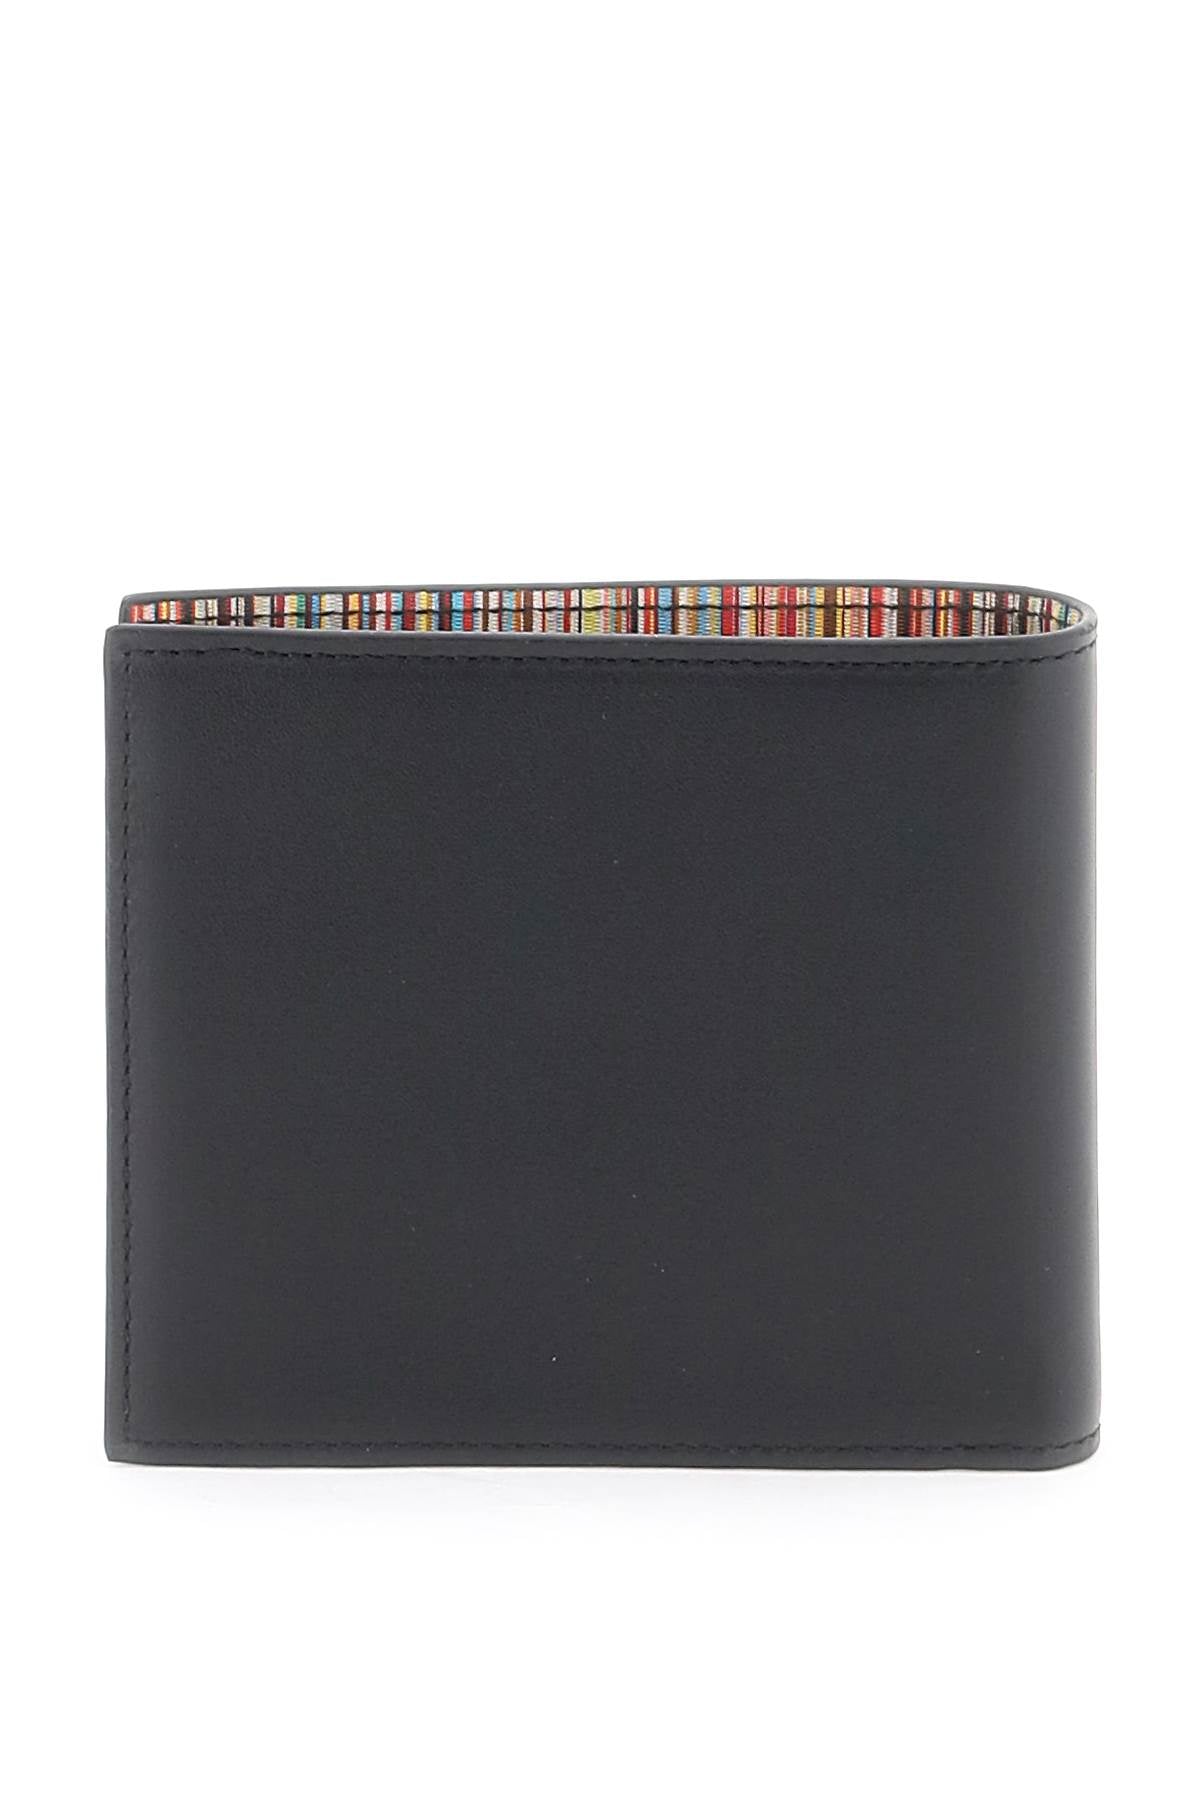 Paul smith signature stripe bifold wallet-2